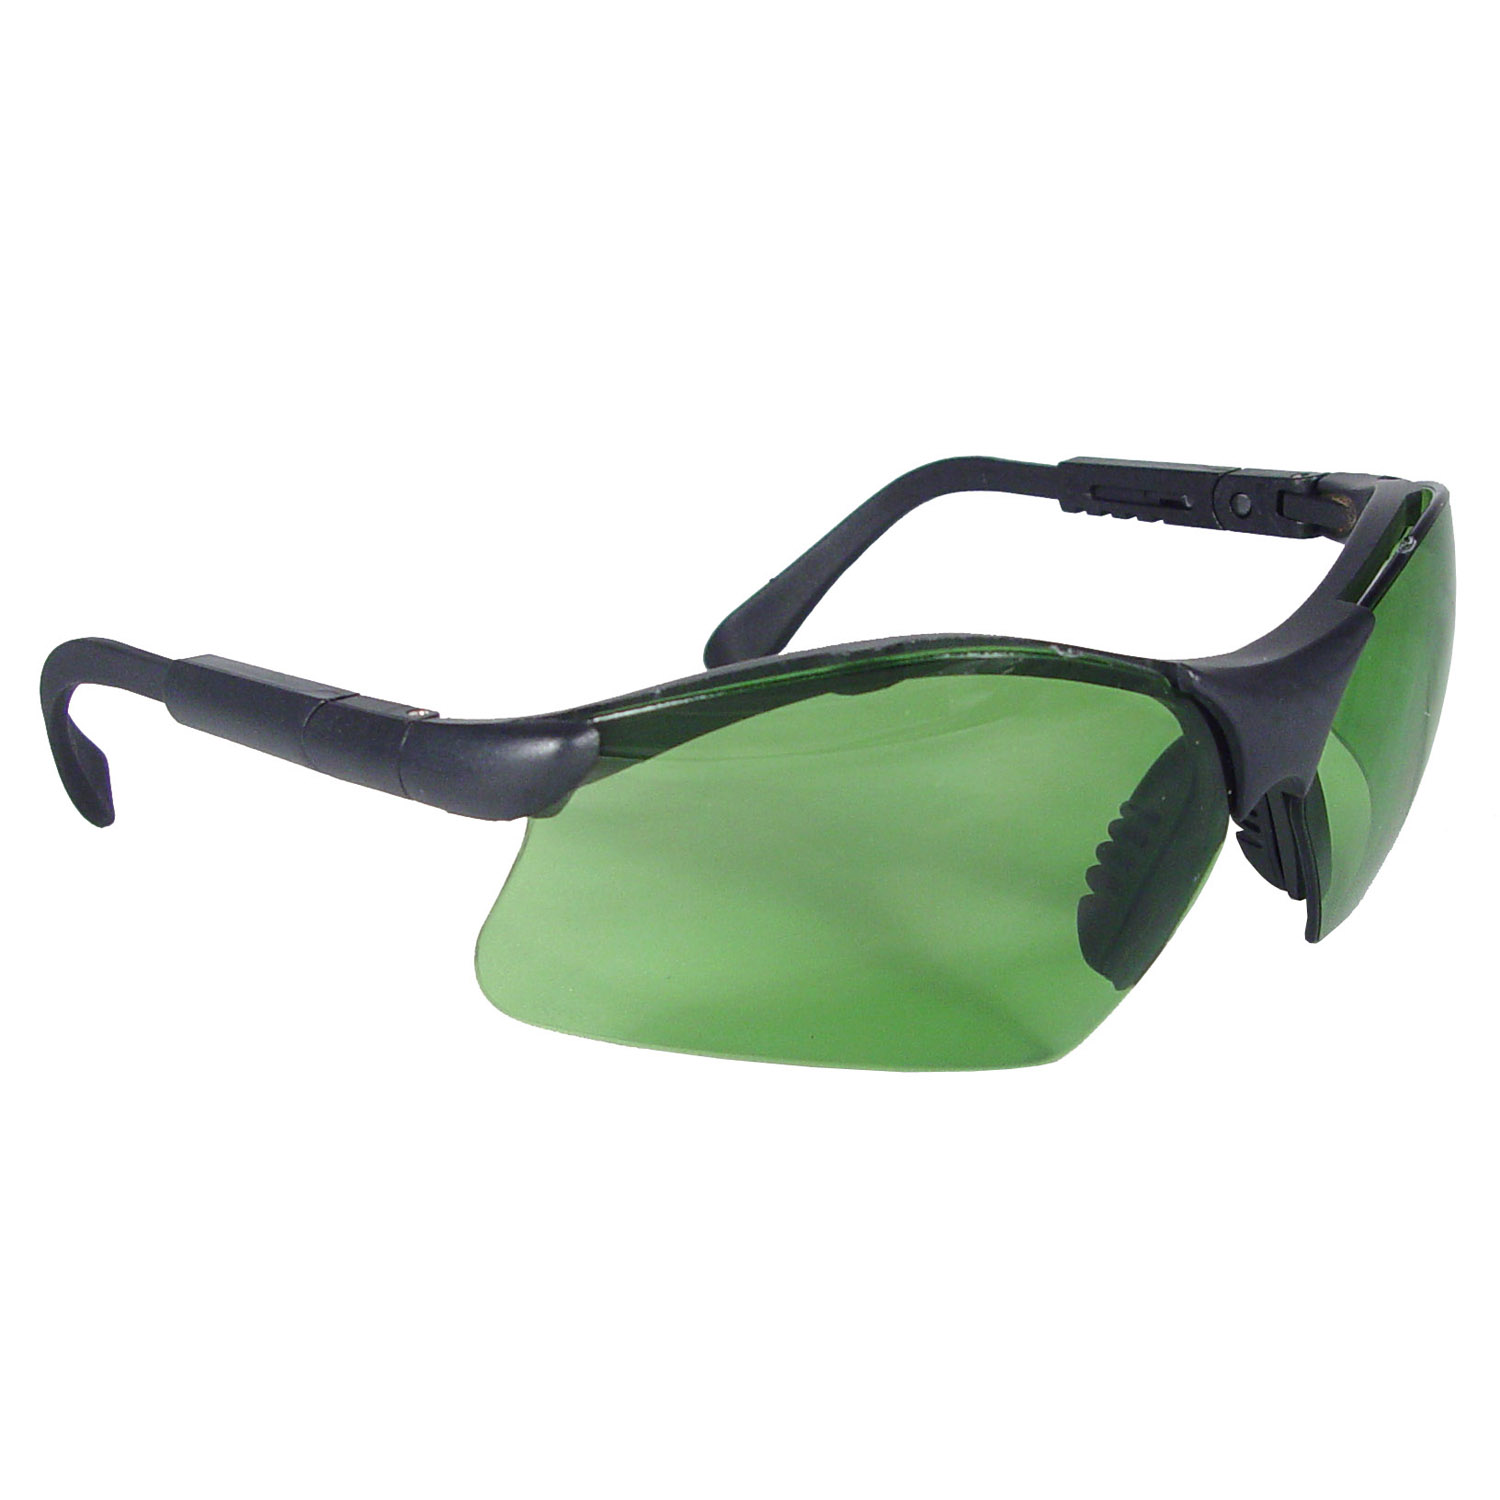 Revelation™ Safety Eyewear - Black Frame - IRUV 2.0 Lens - Tinted Lens